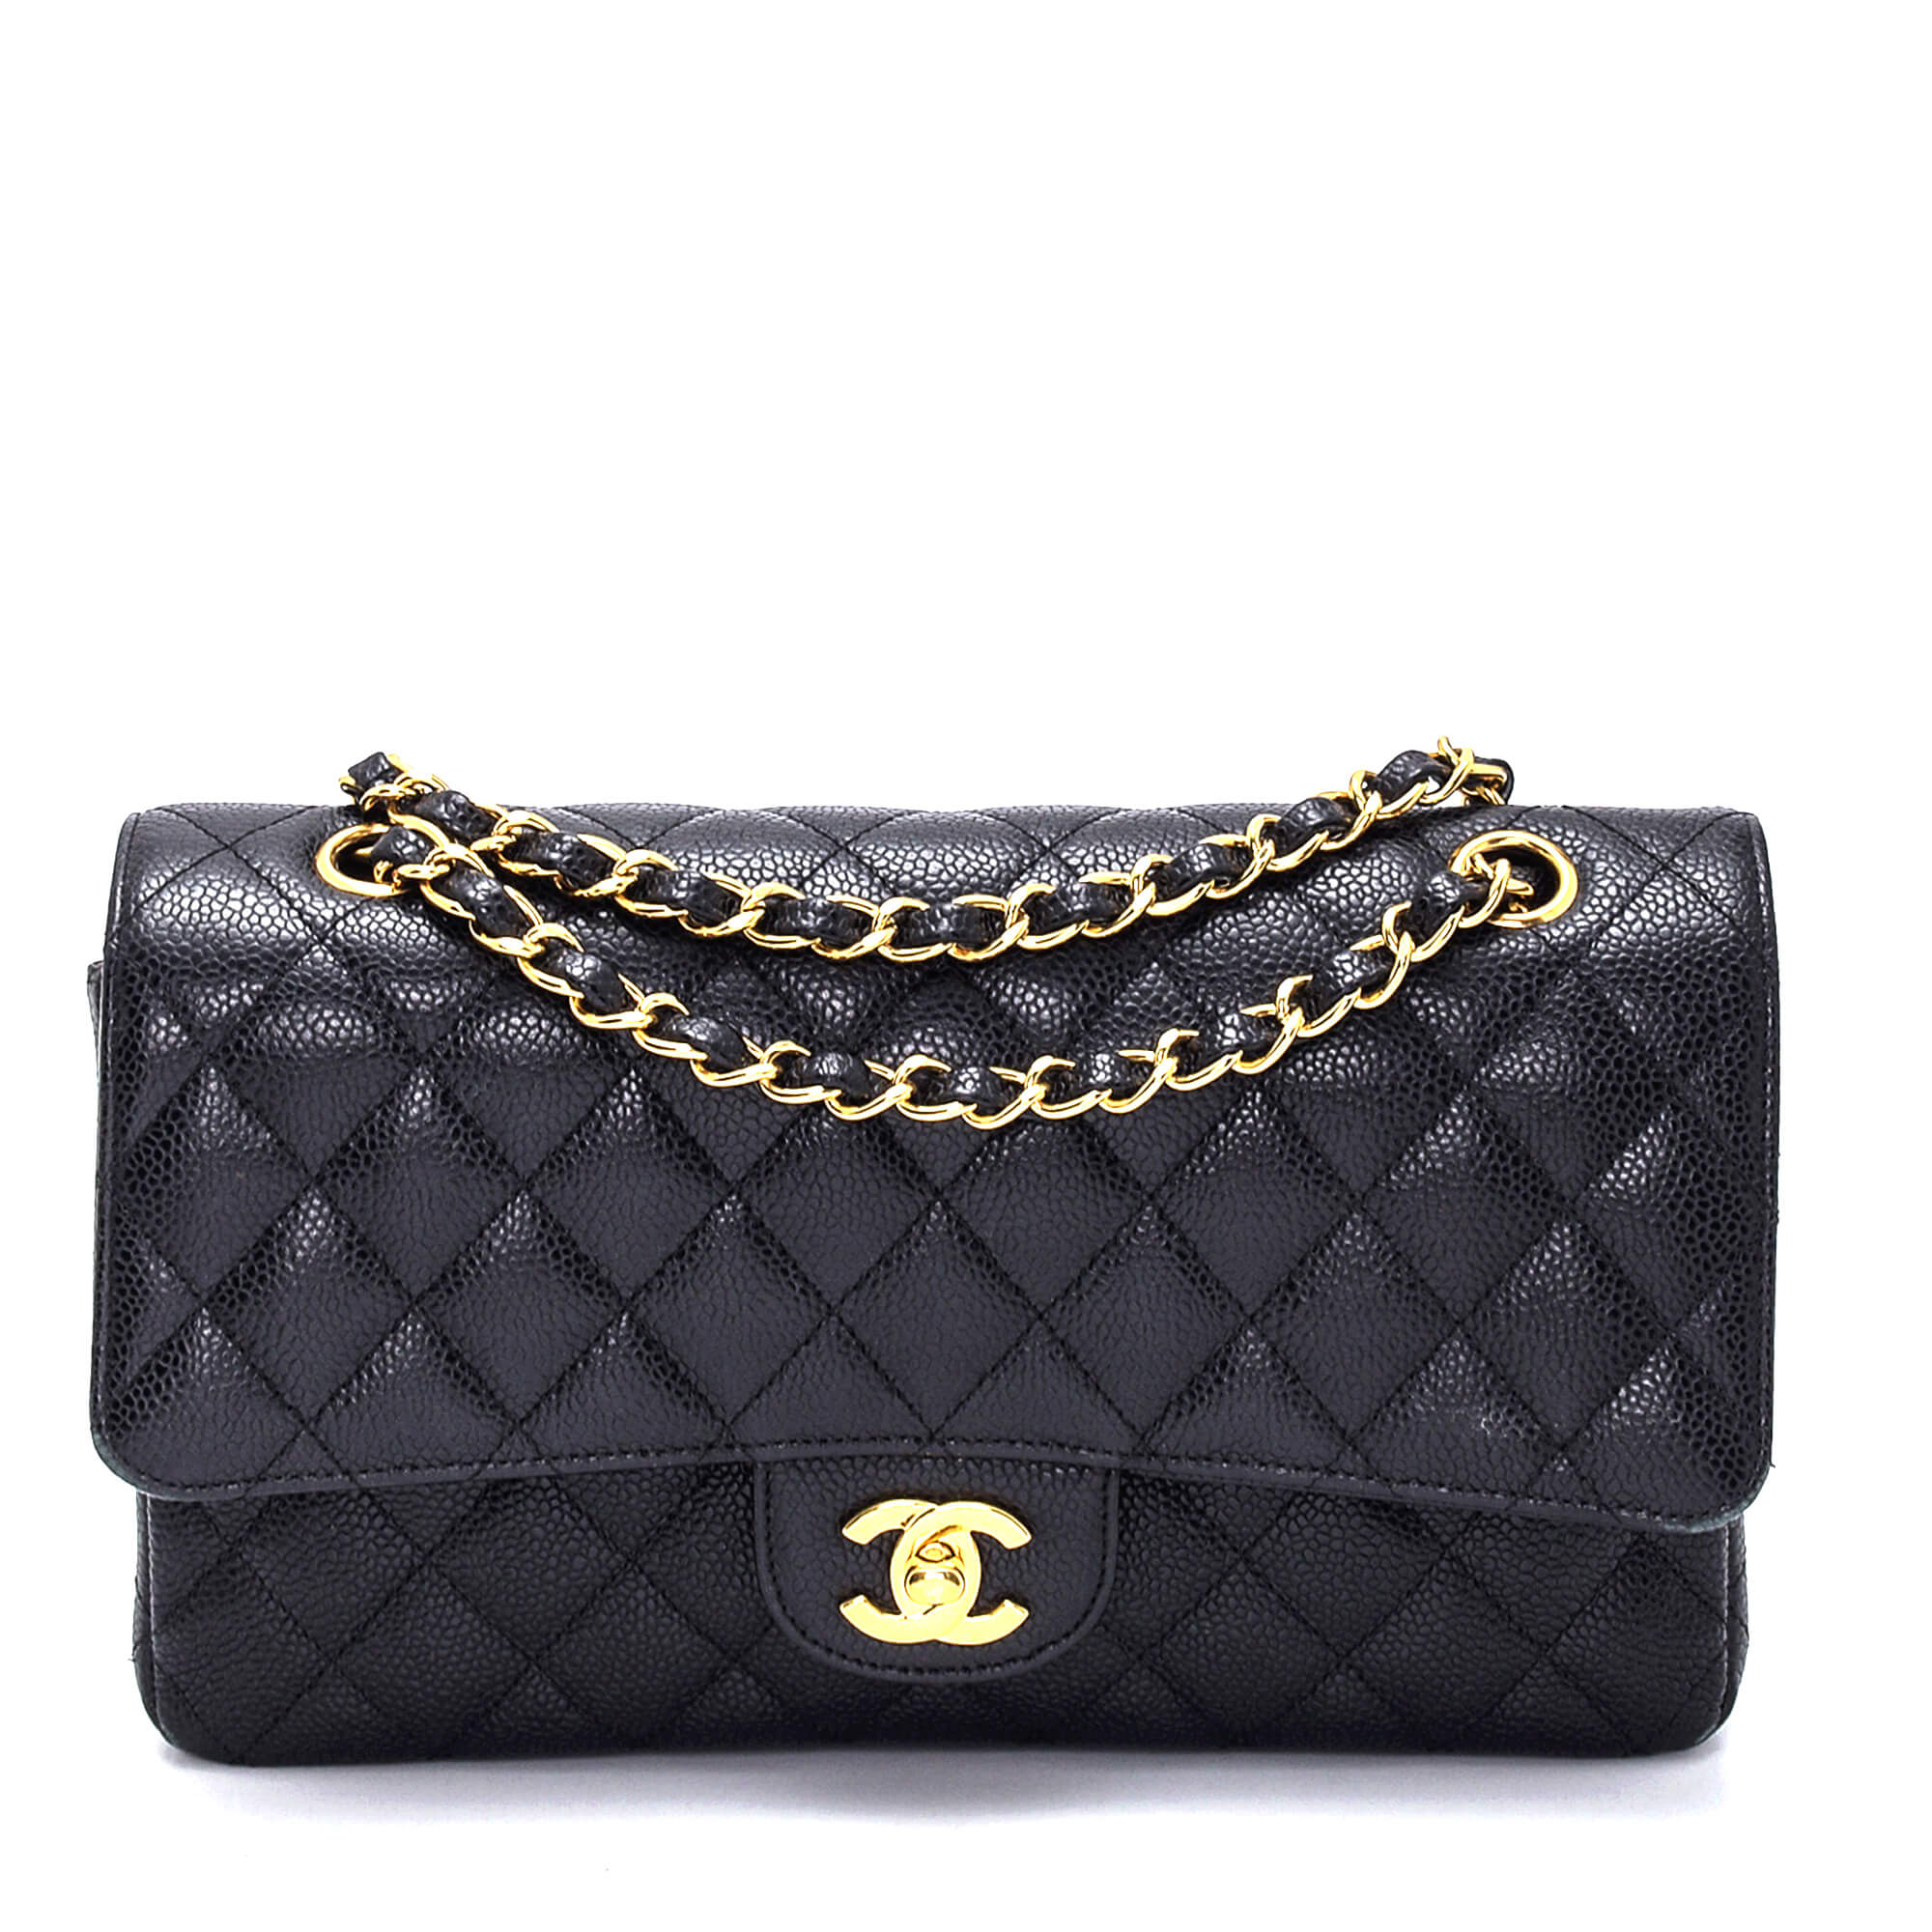 Chanel - Black Caviar Leather 2.55 Medium Flap Bag